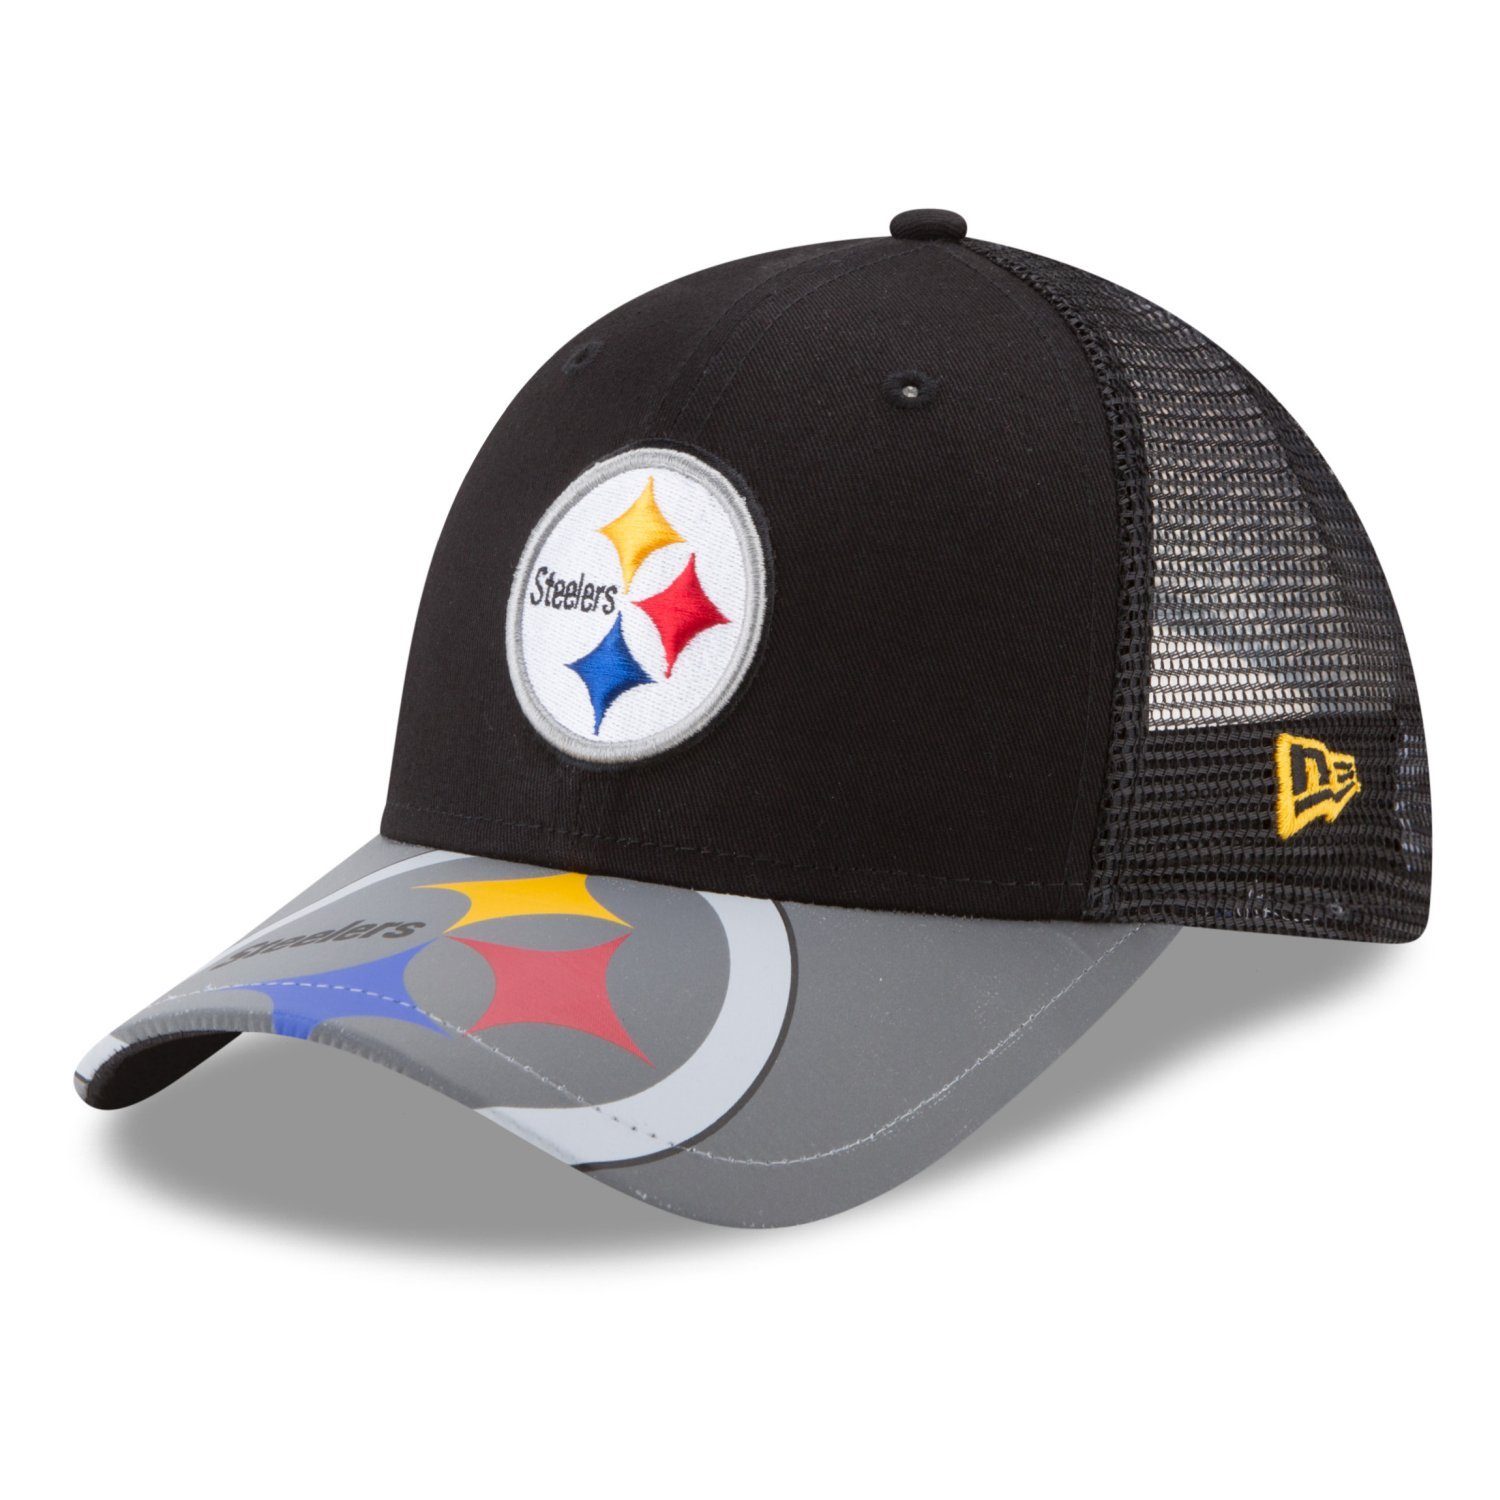 New REFLECT Trucker Pittsburgh NFL Teams Baseball Cap Era Steelers